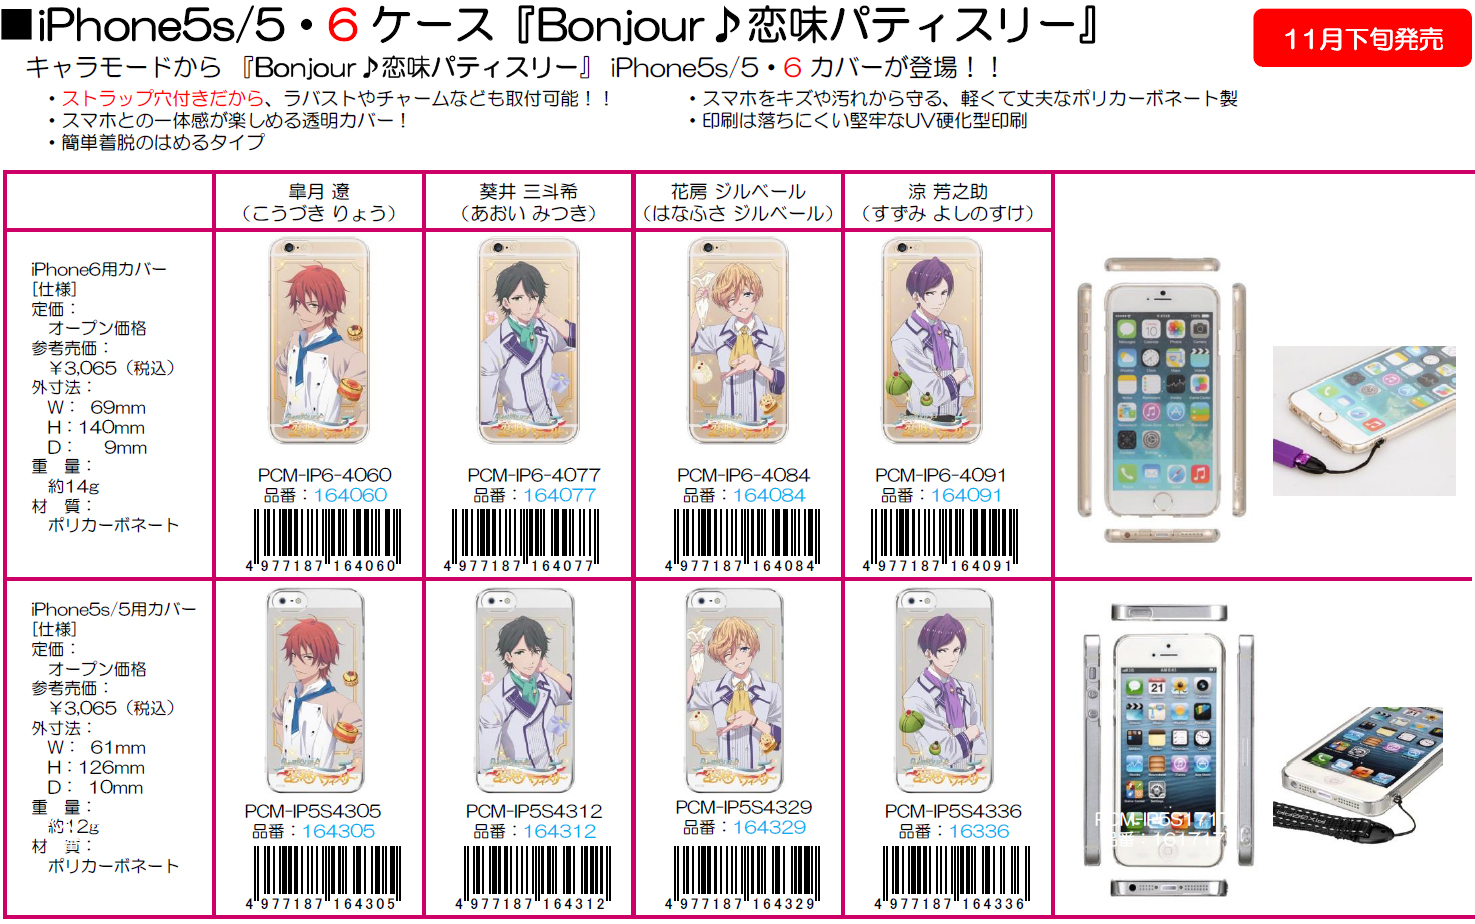 Bonjour 恋味パティスリー Iphone6 5 5sケース 各種 株式会社マイルストン グループ セット商品詳細